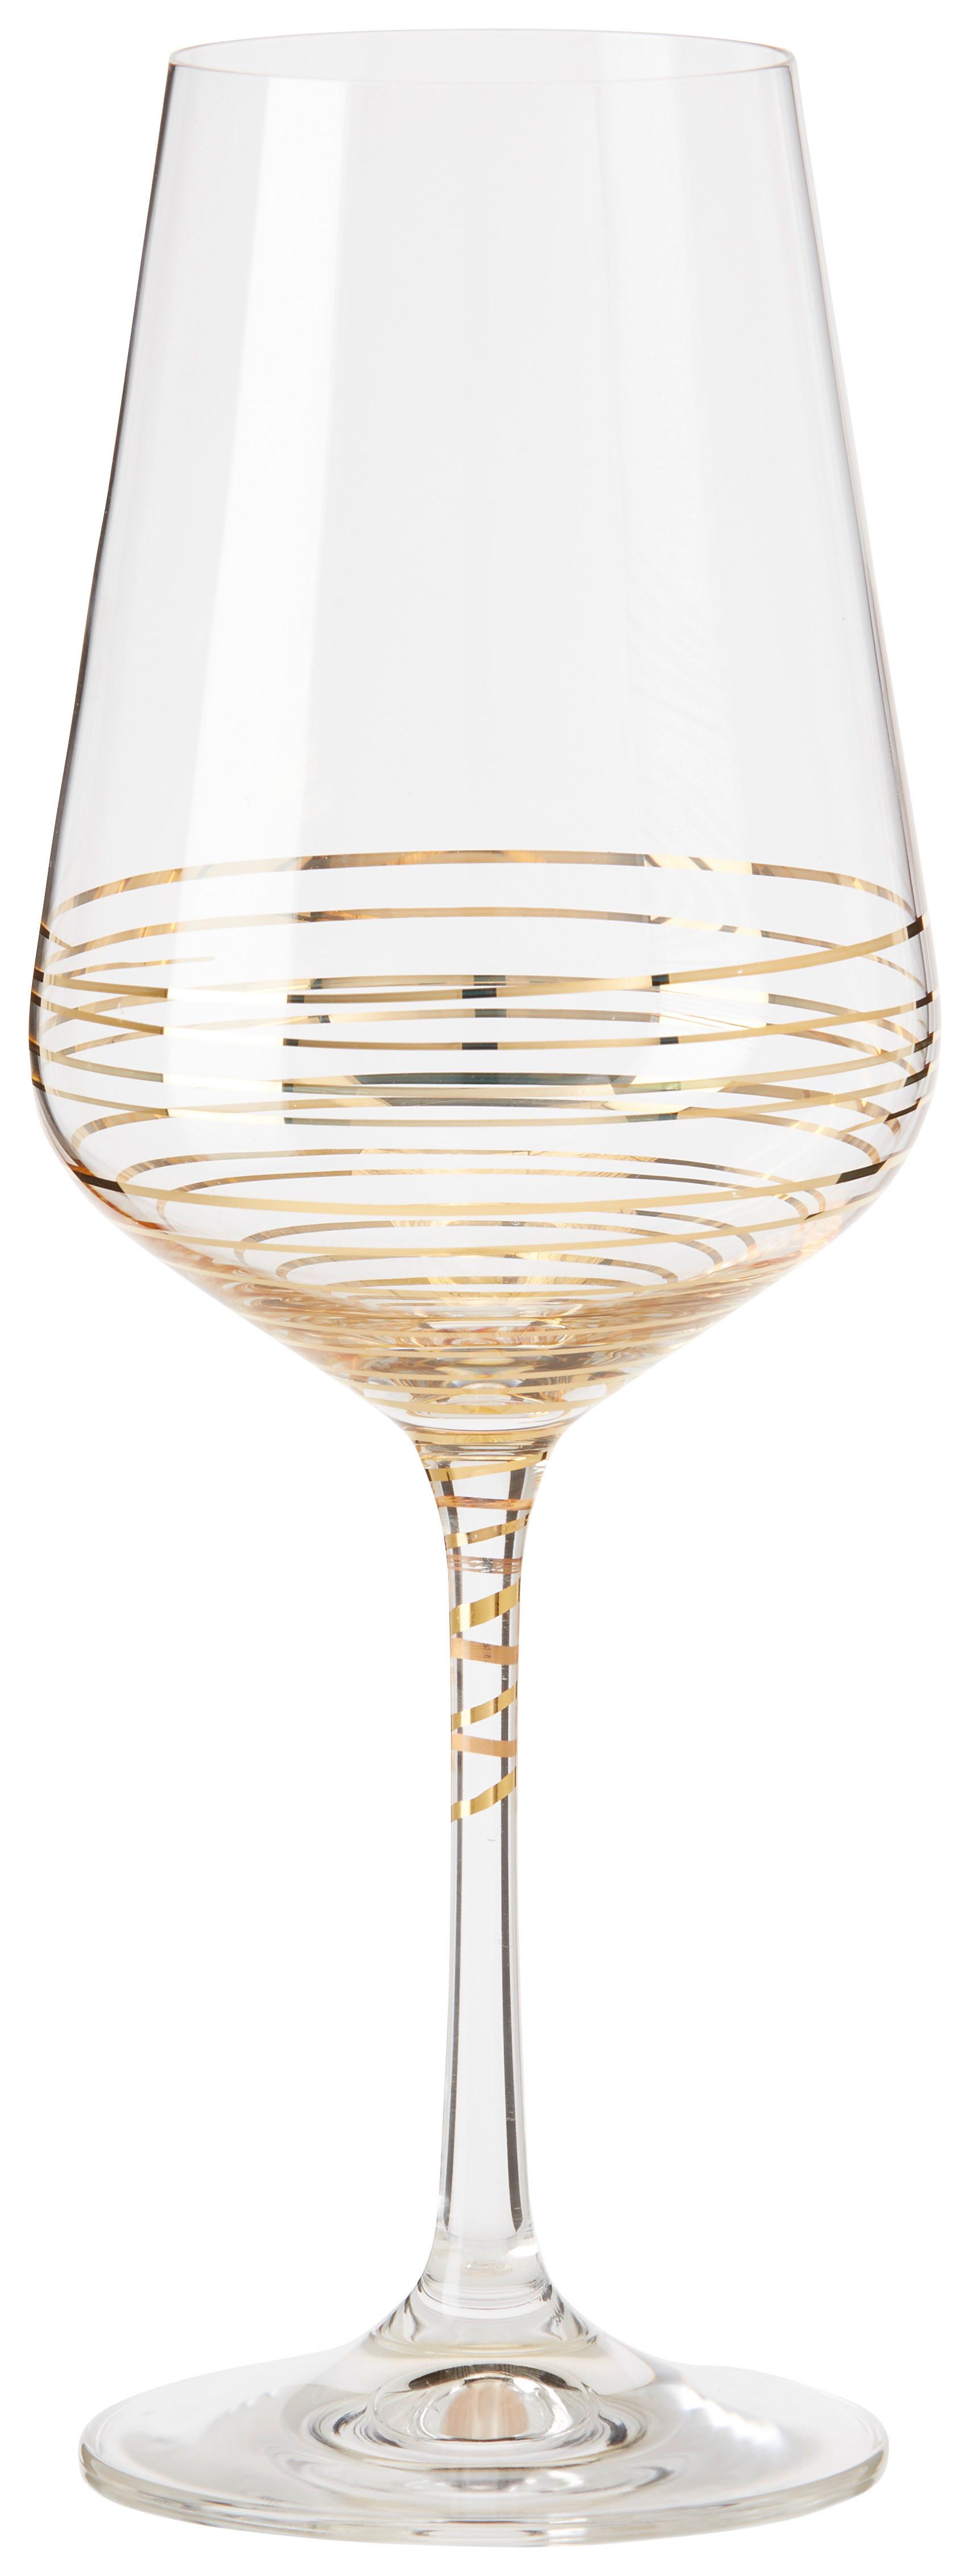 Rotweinglas Elegance ca. 550ml - Klar/Goldfarben, Modern, Glas (0,55l) - Bohemia